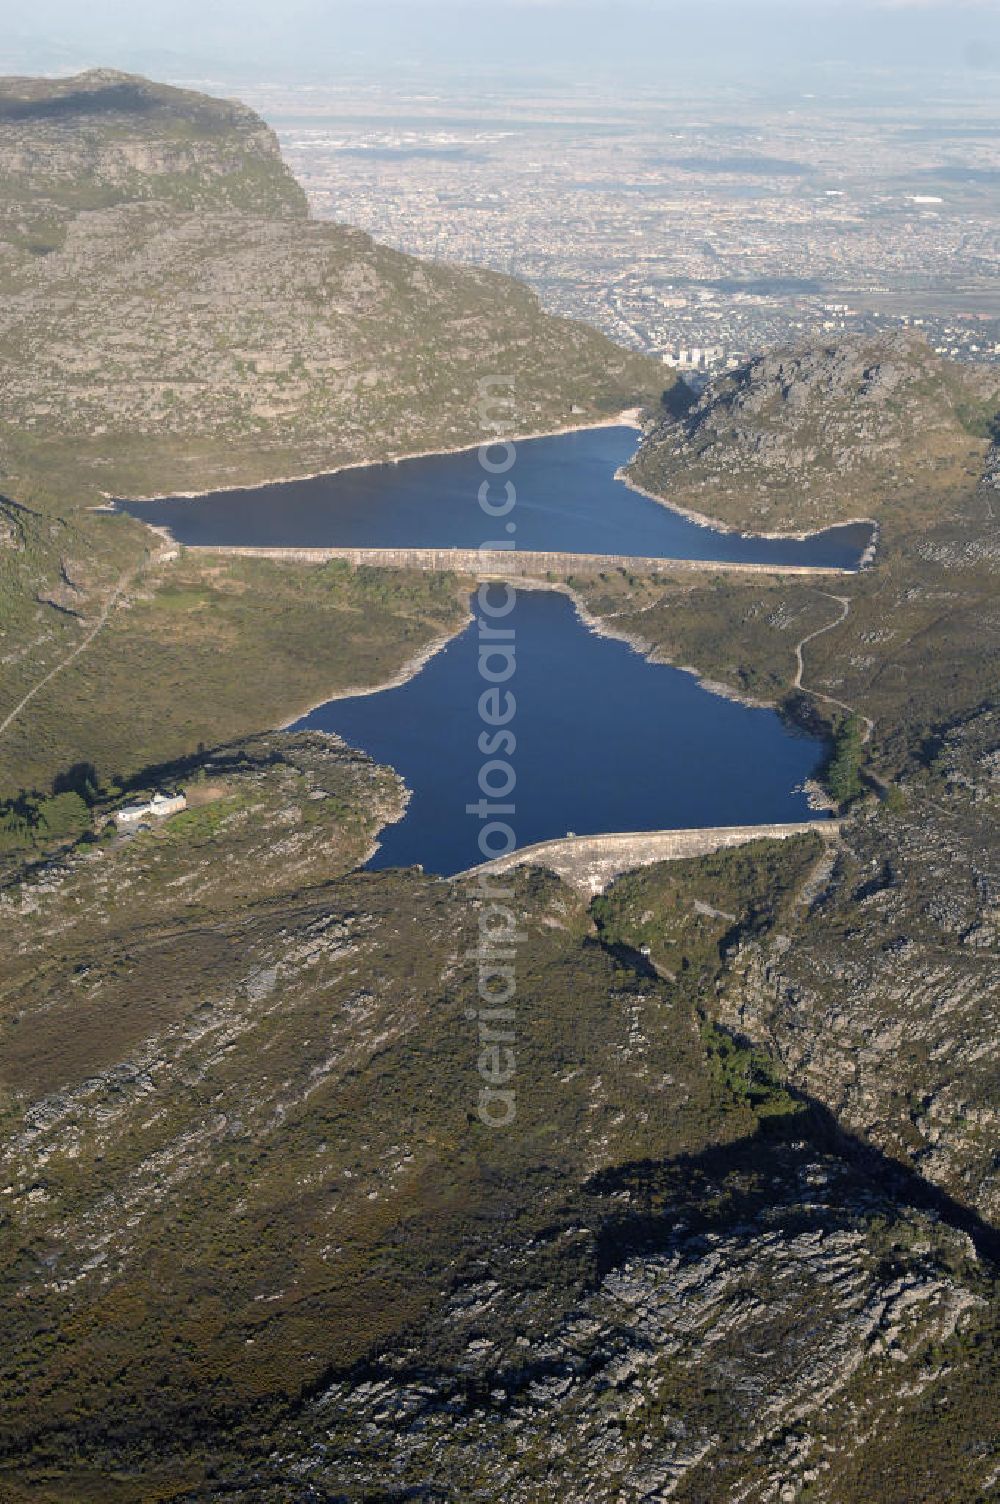 Aerial photograph Kapstadt / Cape Town - Blick auf die Gebirgsketten des Tafelberges am Kap der Guten Hoffnung in Kapstadt. View onto the mountain ranges of Table Mountain at the Cape of Good Hope in Cape Town.